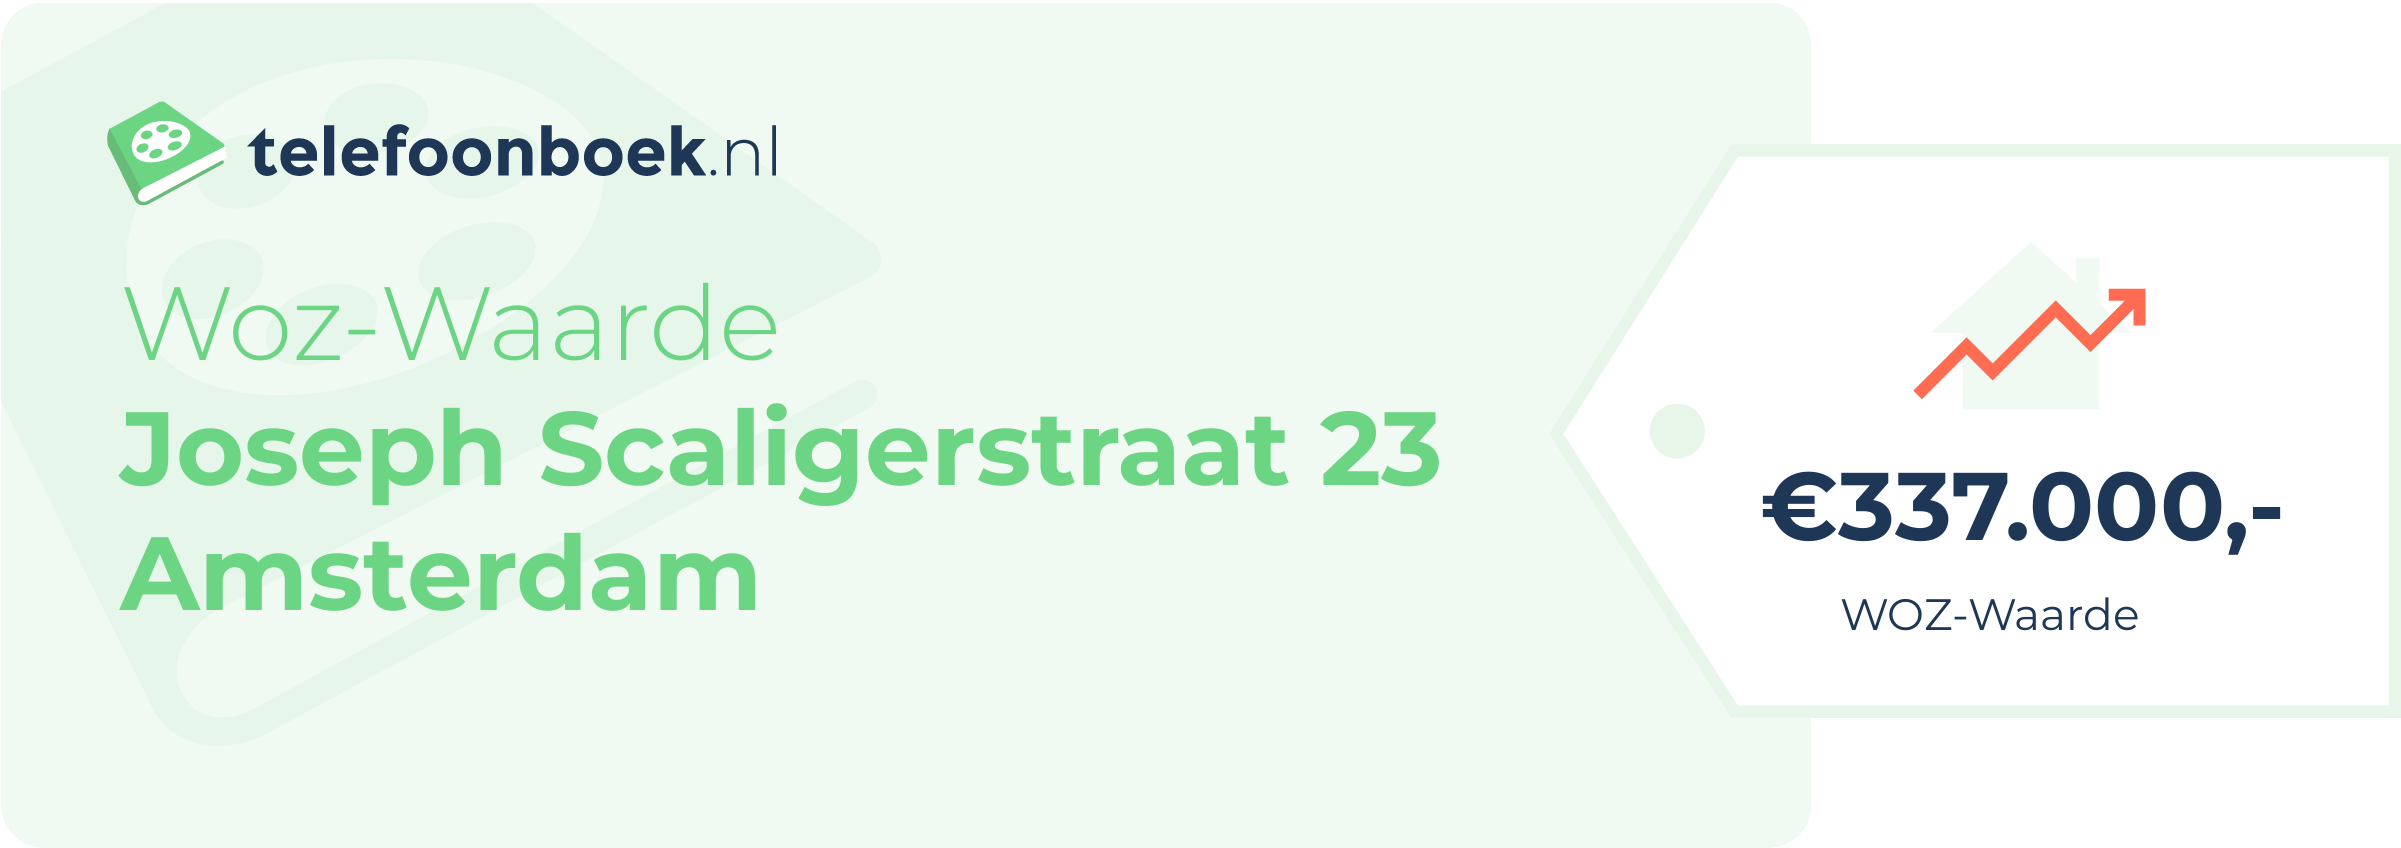 WOZ-waarde Joseph Scaligerstraat 23 Amsterdam